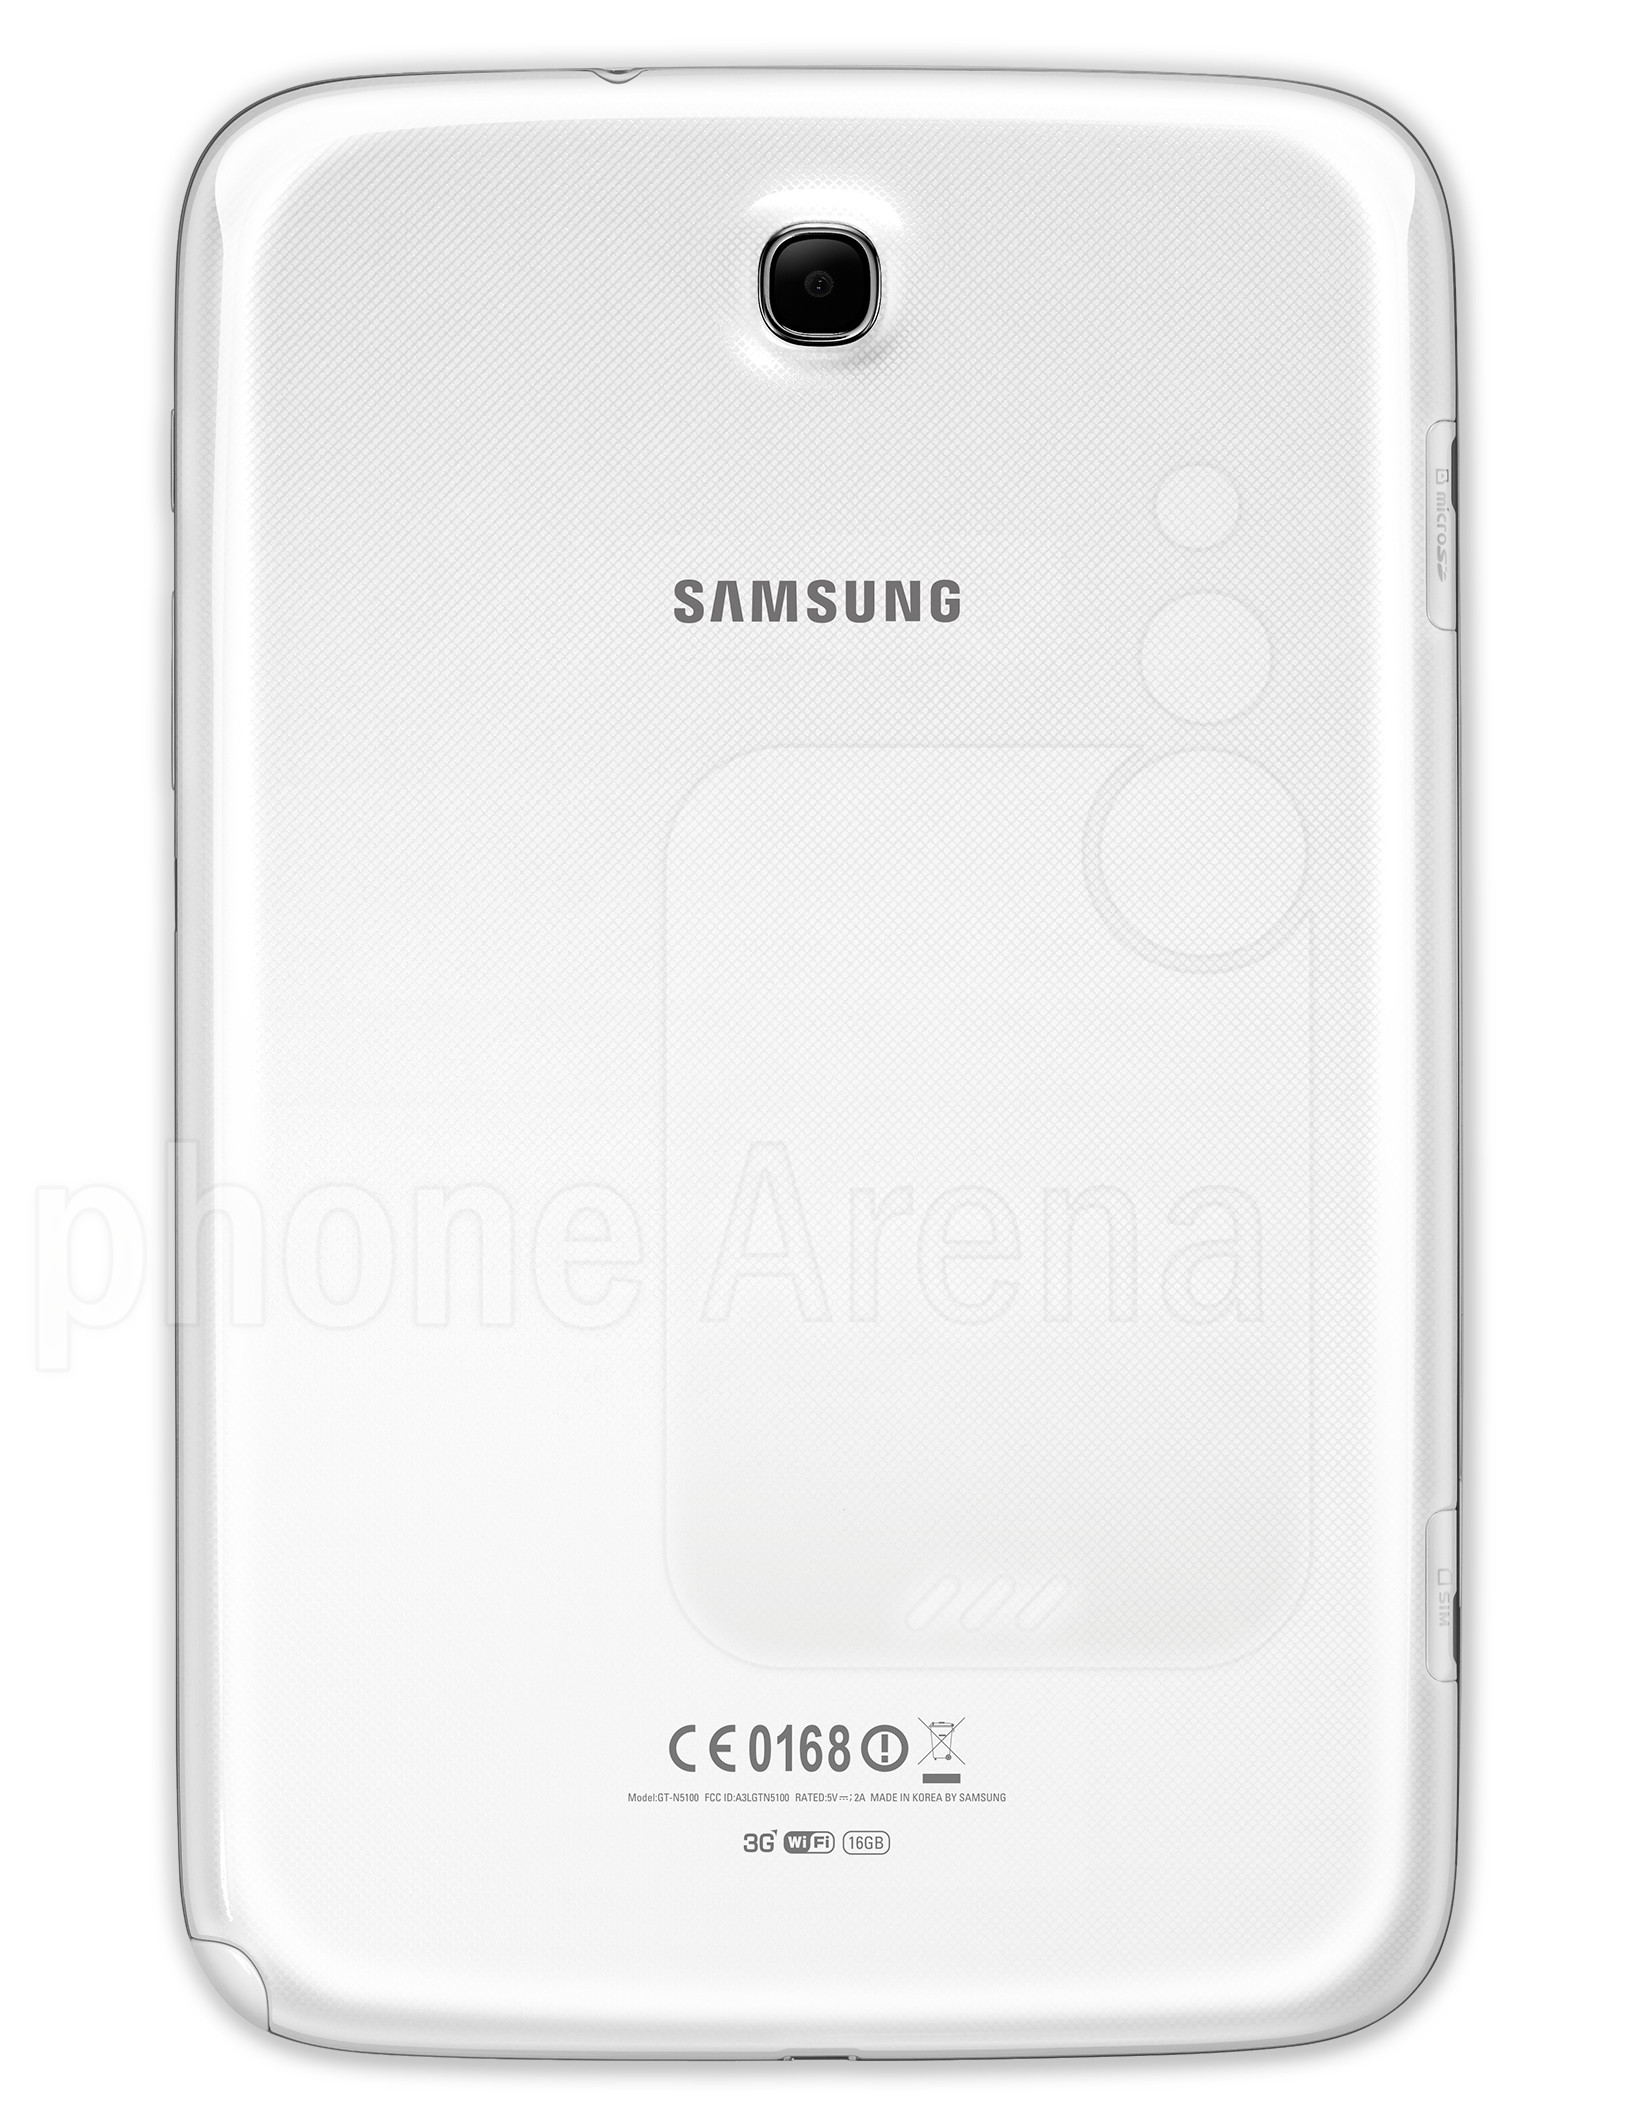 Samsung Galaxy Note 8 0 specs